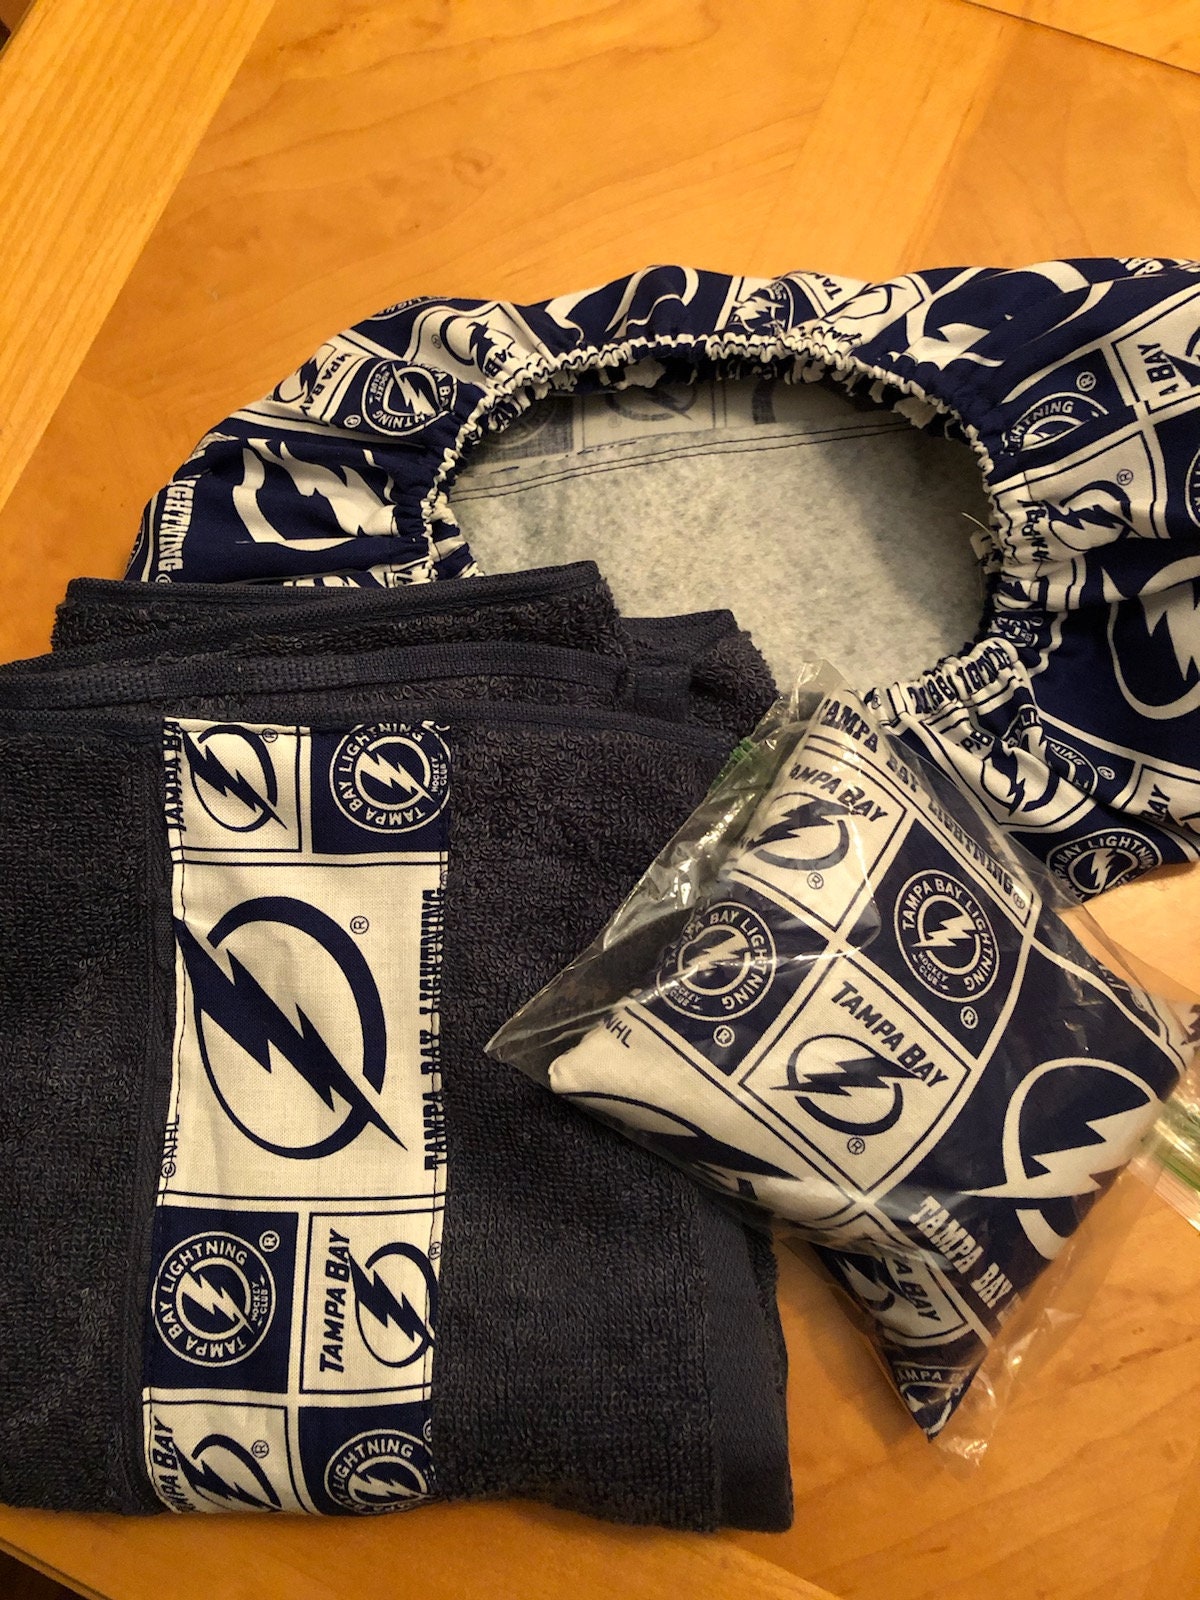 Tampa Bay Lightning Digital Camo NHL Fleece Fabric Remnants - College  Fabric Store